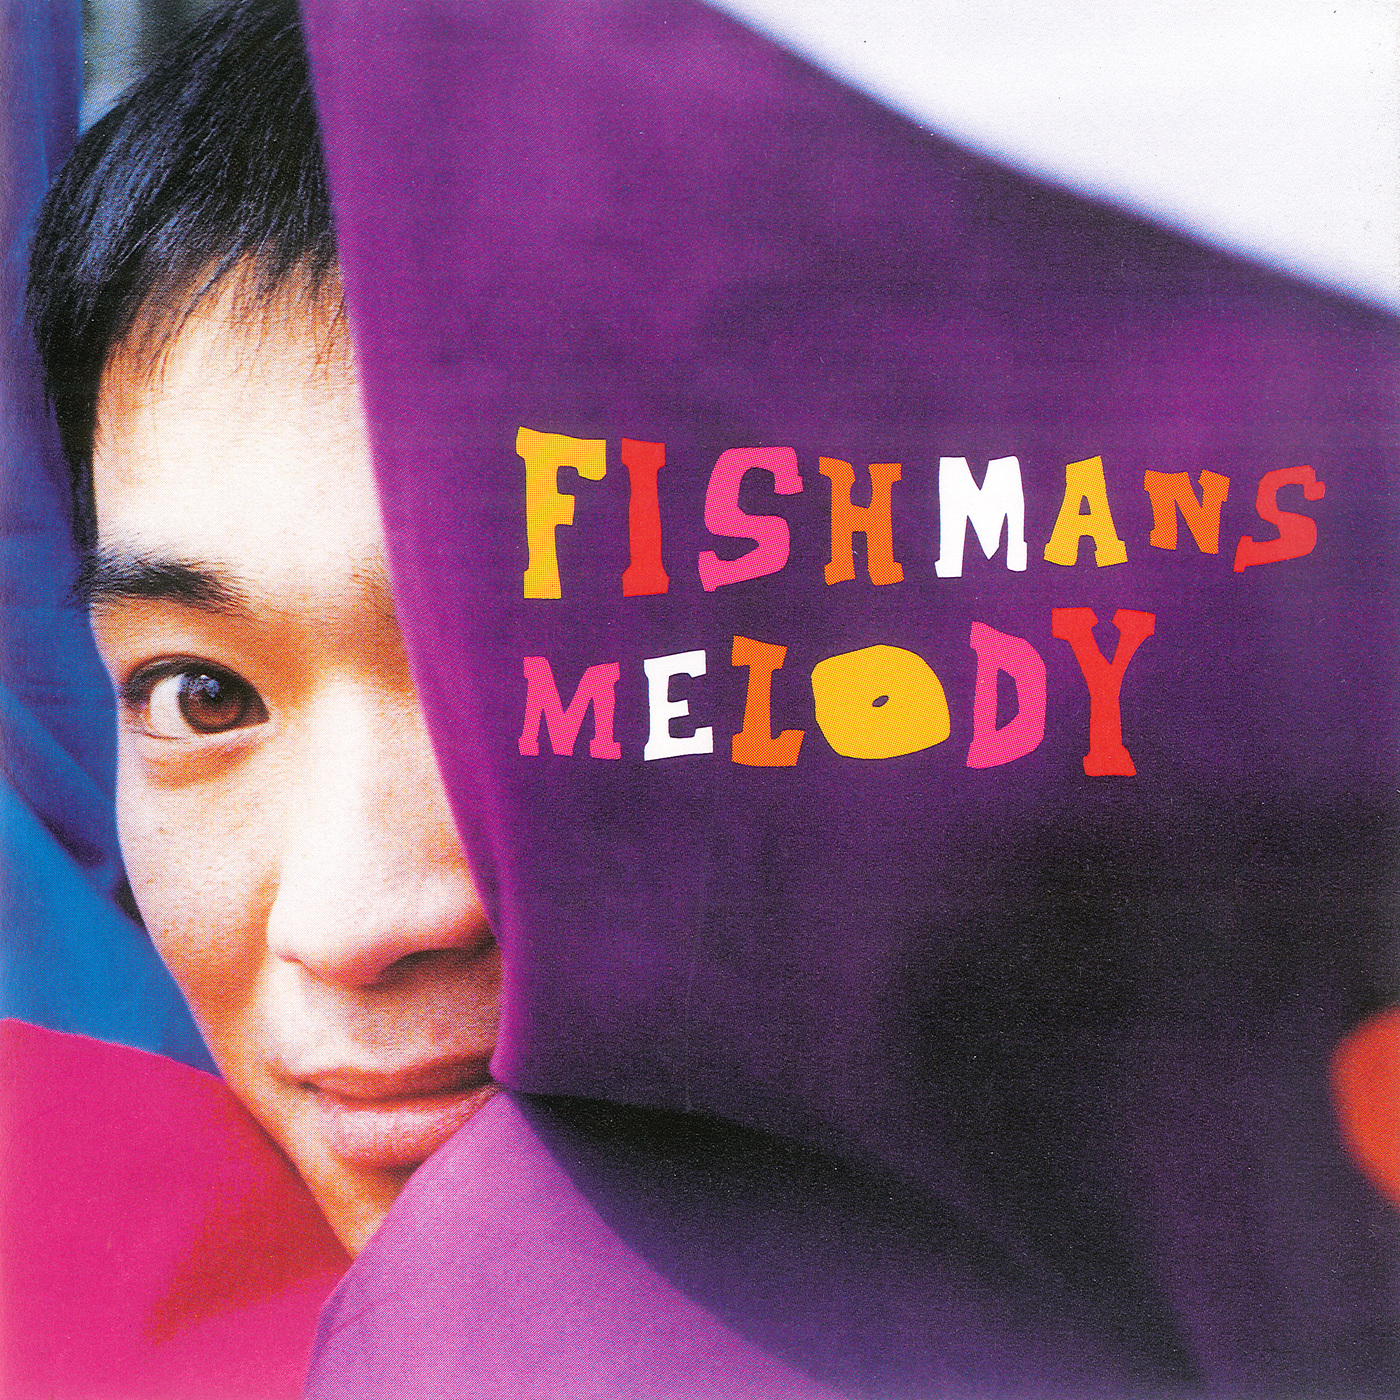 fishmans long season download blogspot